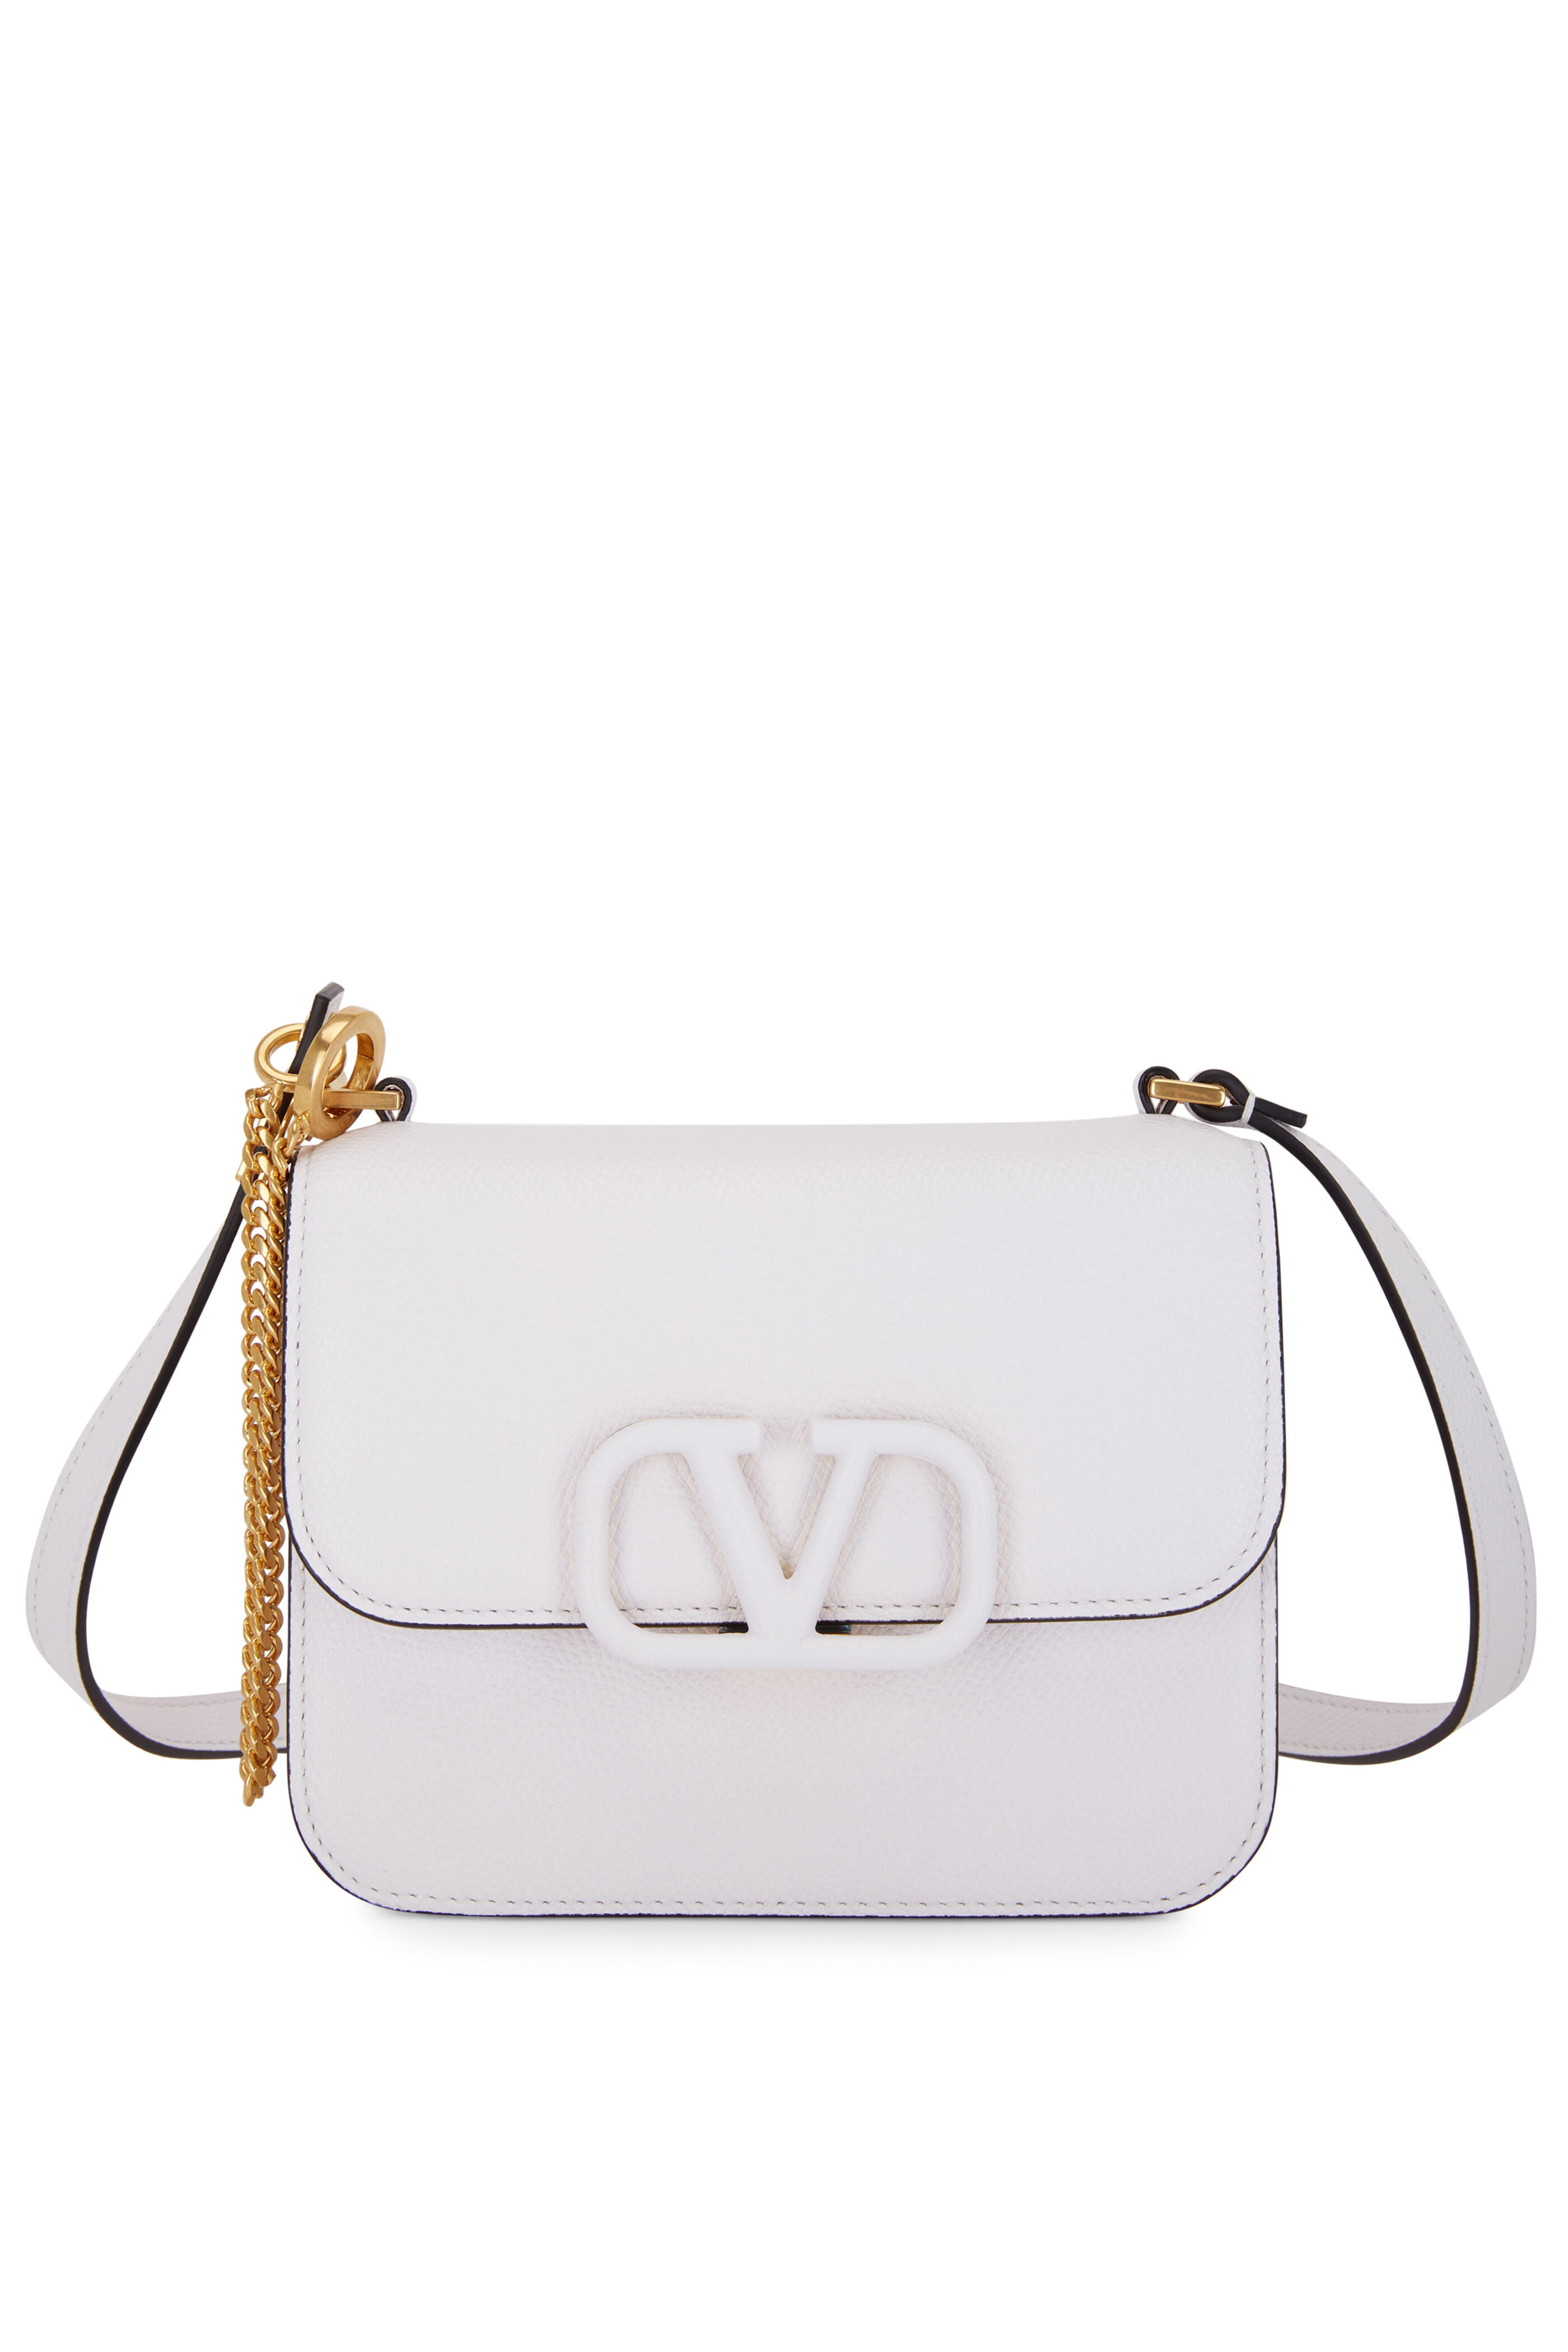 Valentino Garavani Off-White Small Locò Bag - ShopStyle